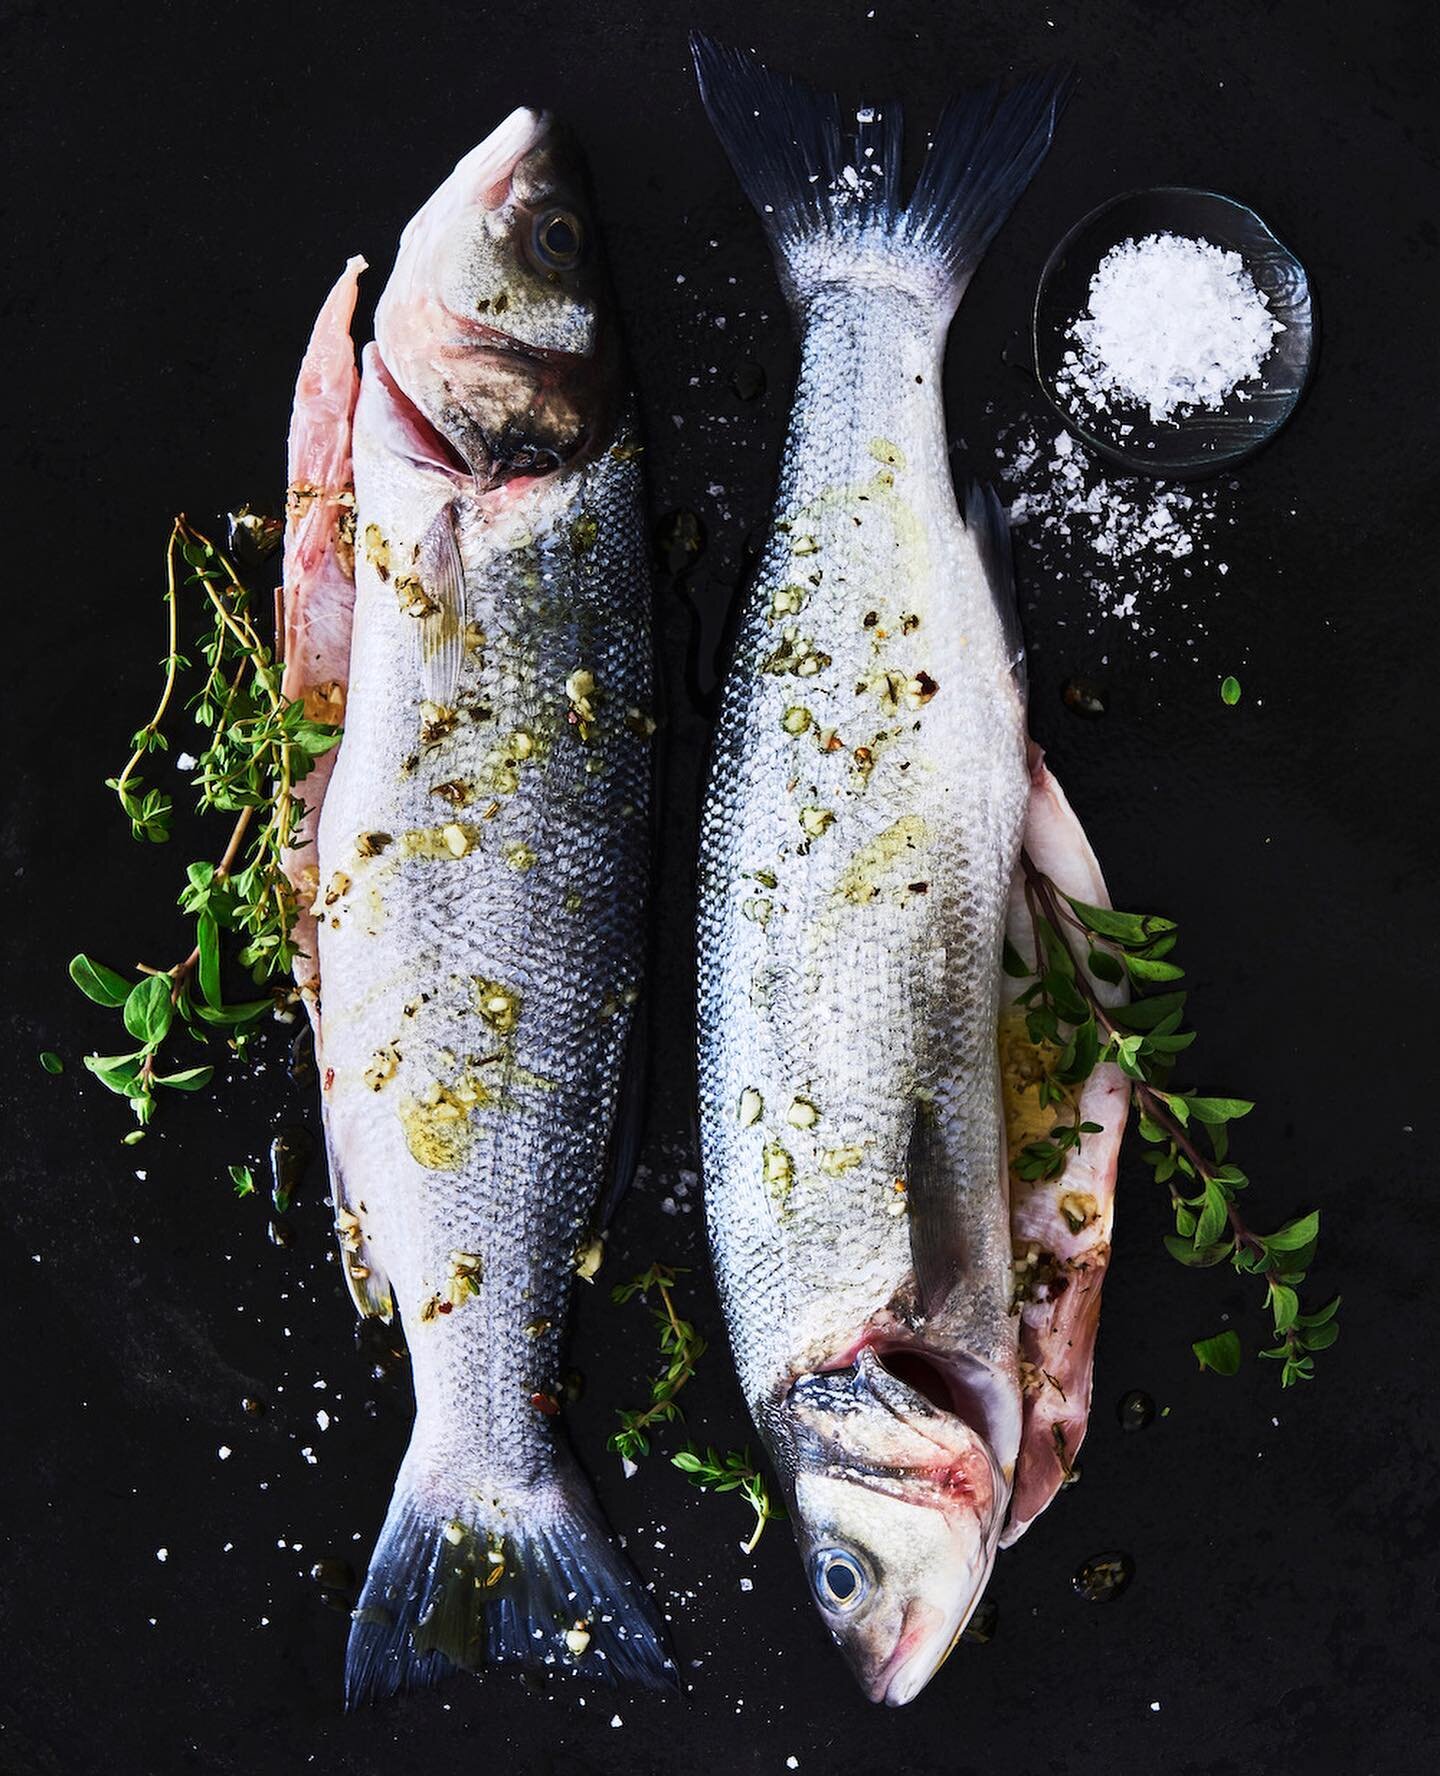 #newwork #bronzino #fish #foodstyling #mediterraneanfood #cookbooks shot by the amazing and talented @sunsetphoto